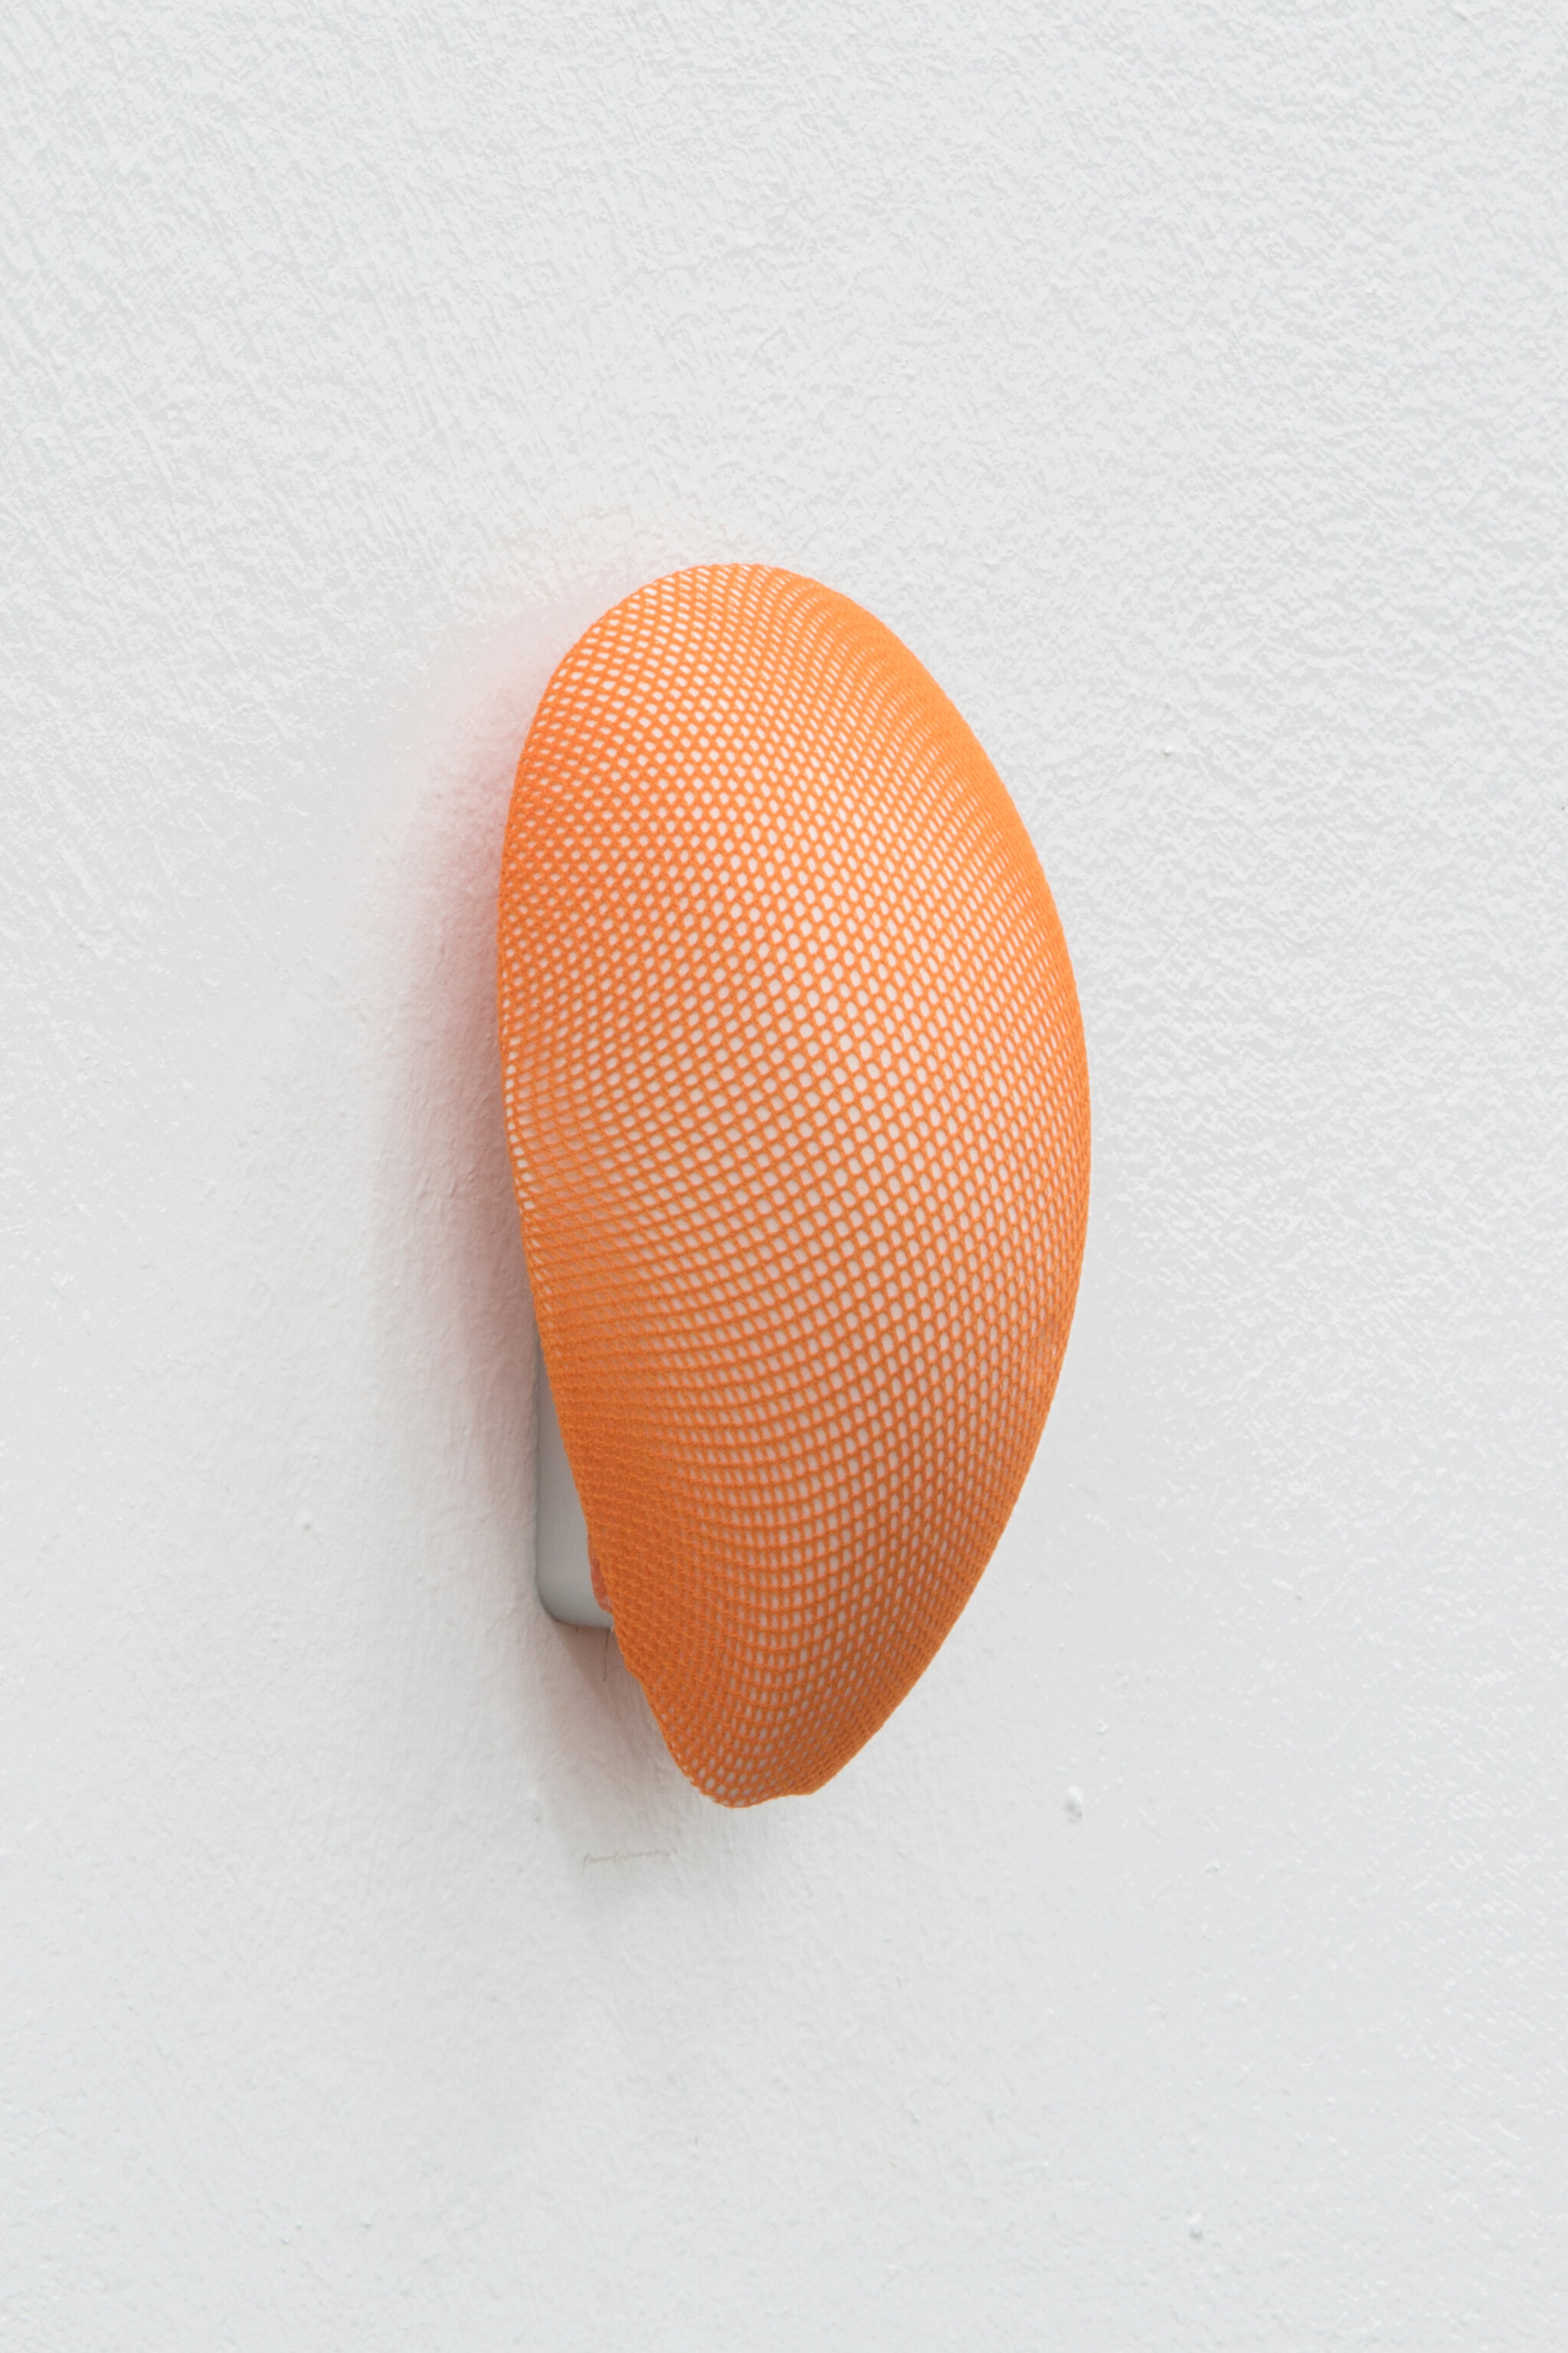 Daphne Ahlers, Orange pill, 2019